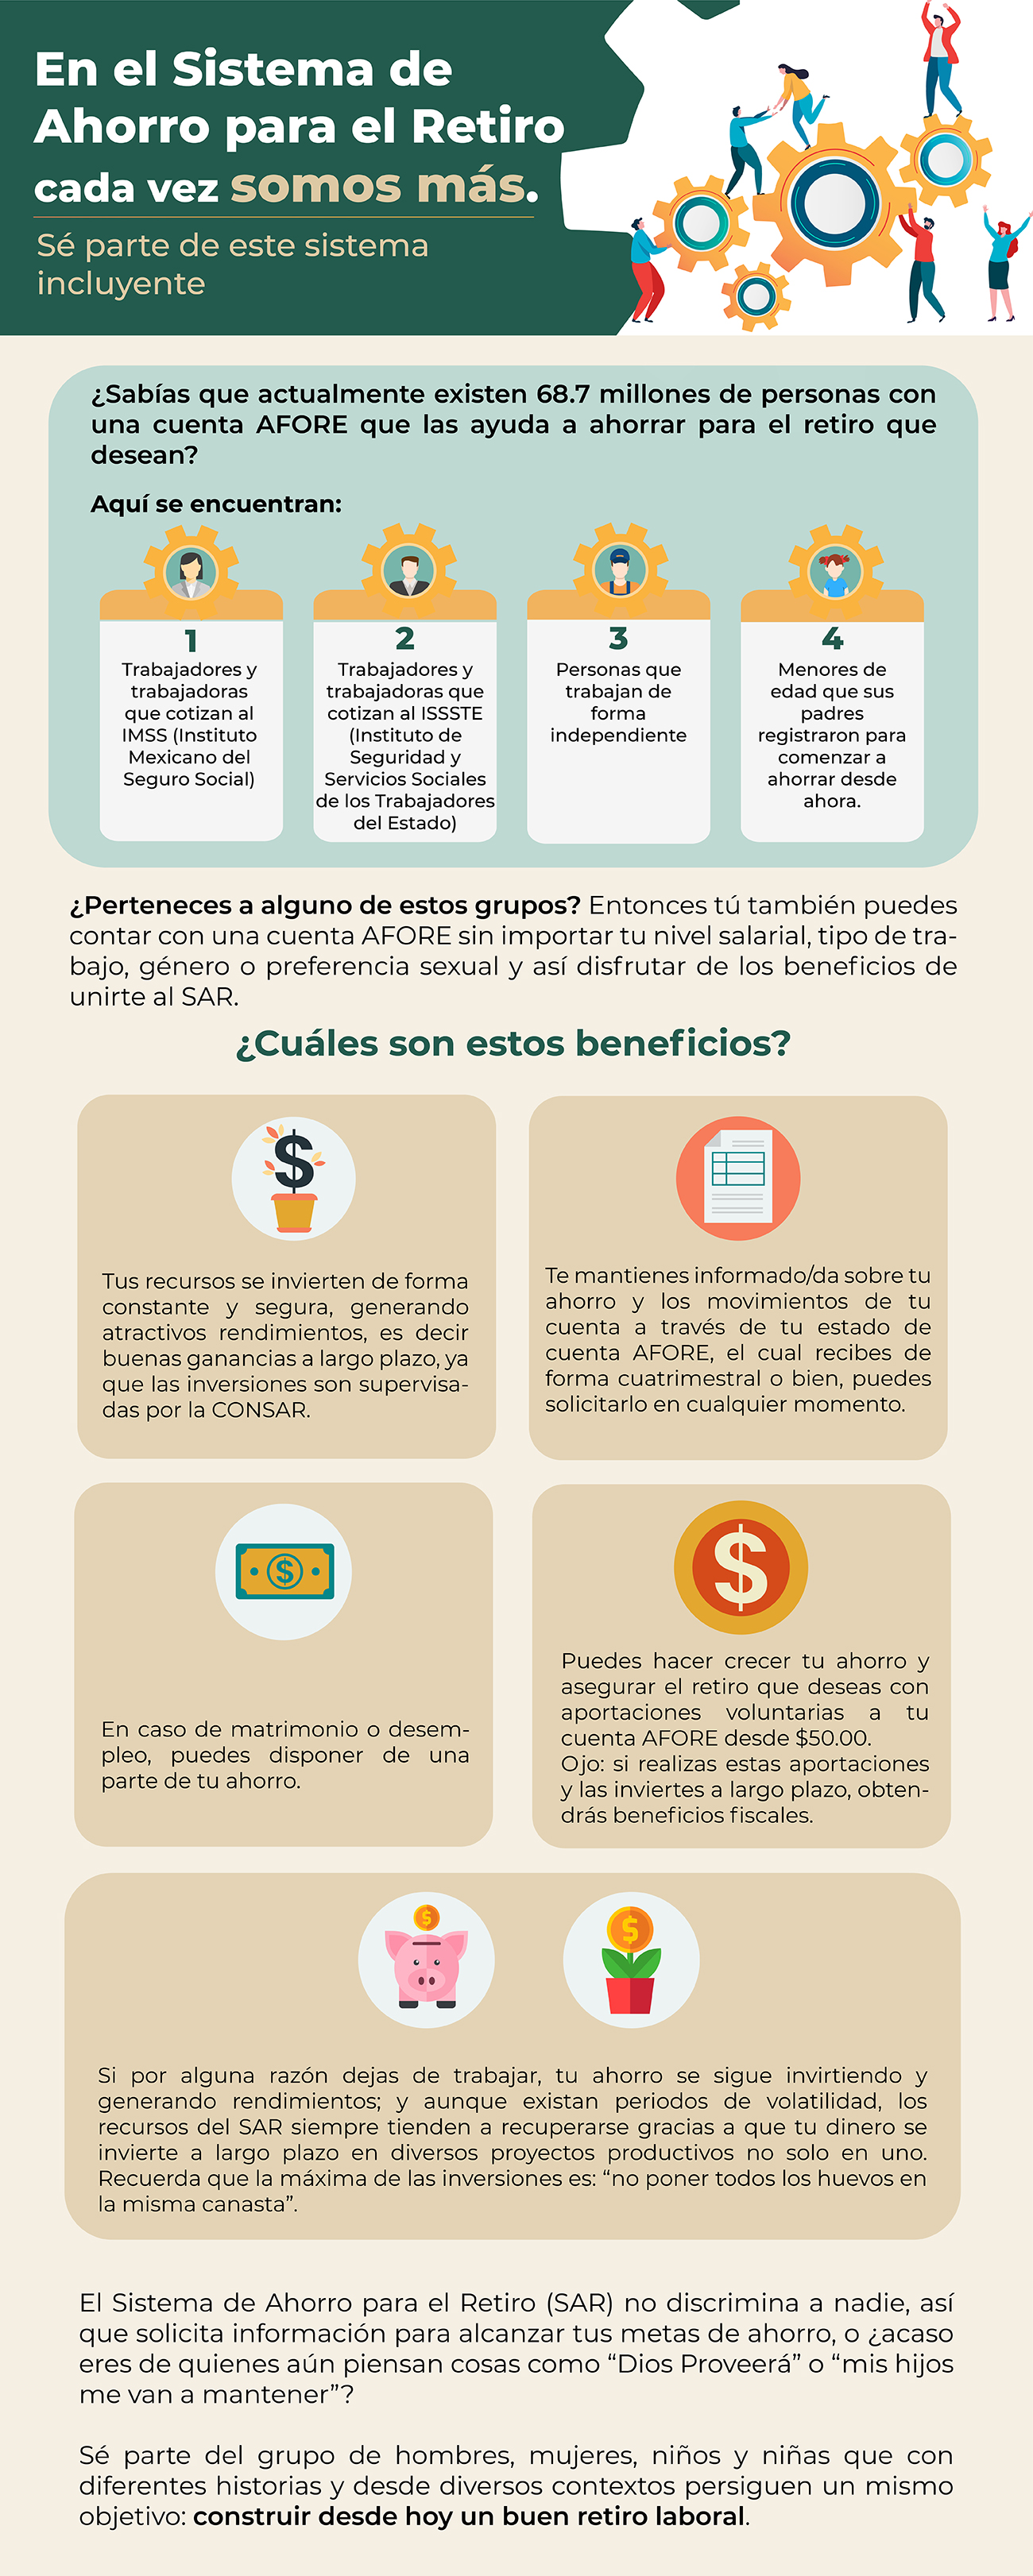 /cms/uploads/image/file/661328/Infografi_a1_educacio_n_financiera_Mesa_de_trabajo_1.jpeg